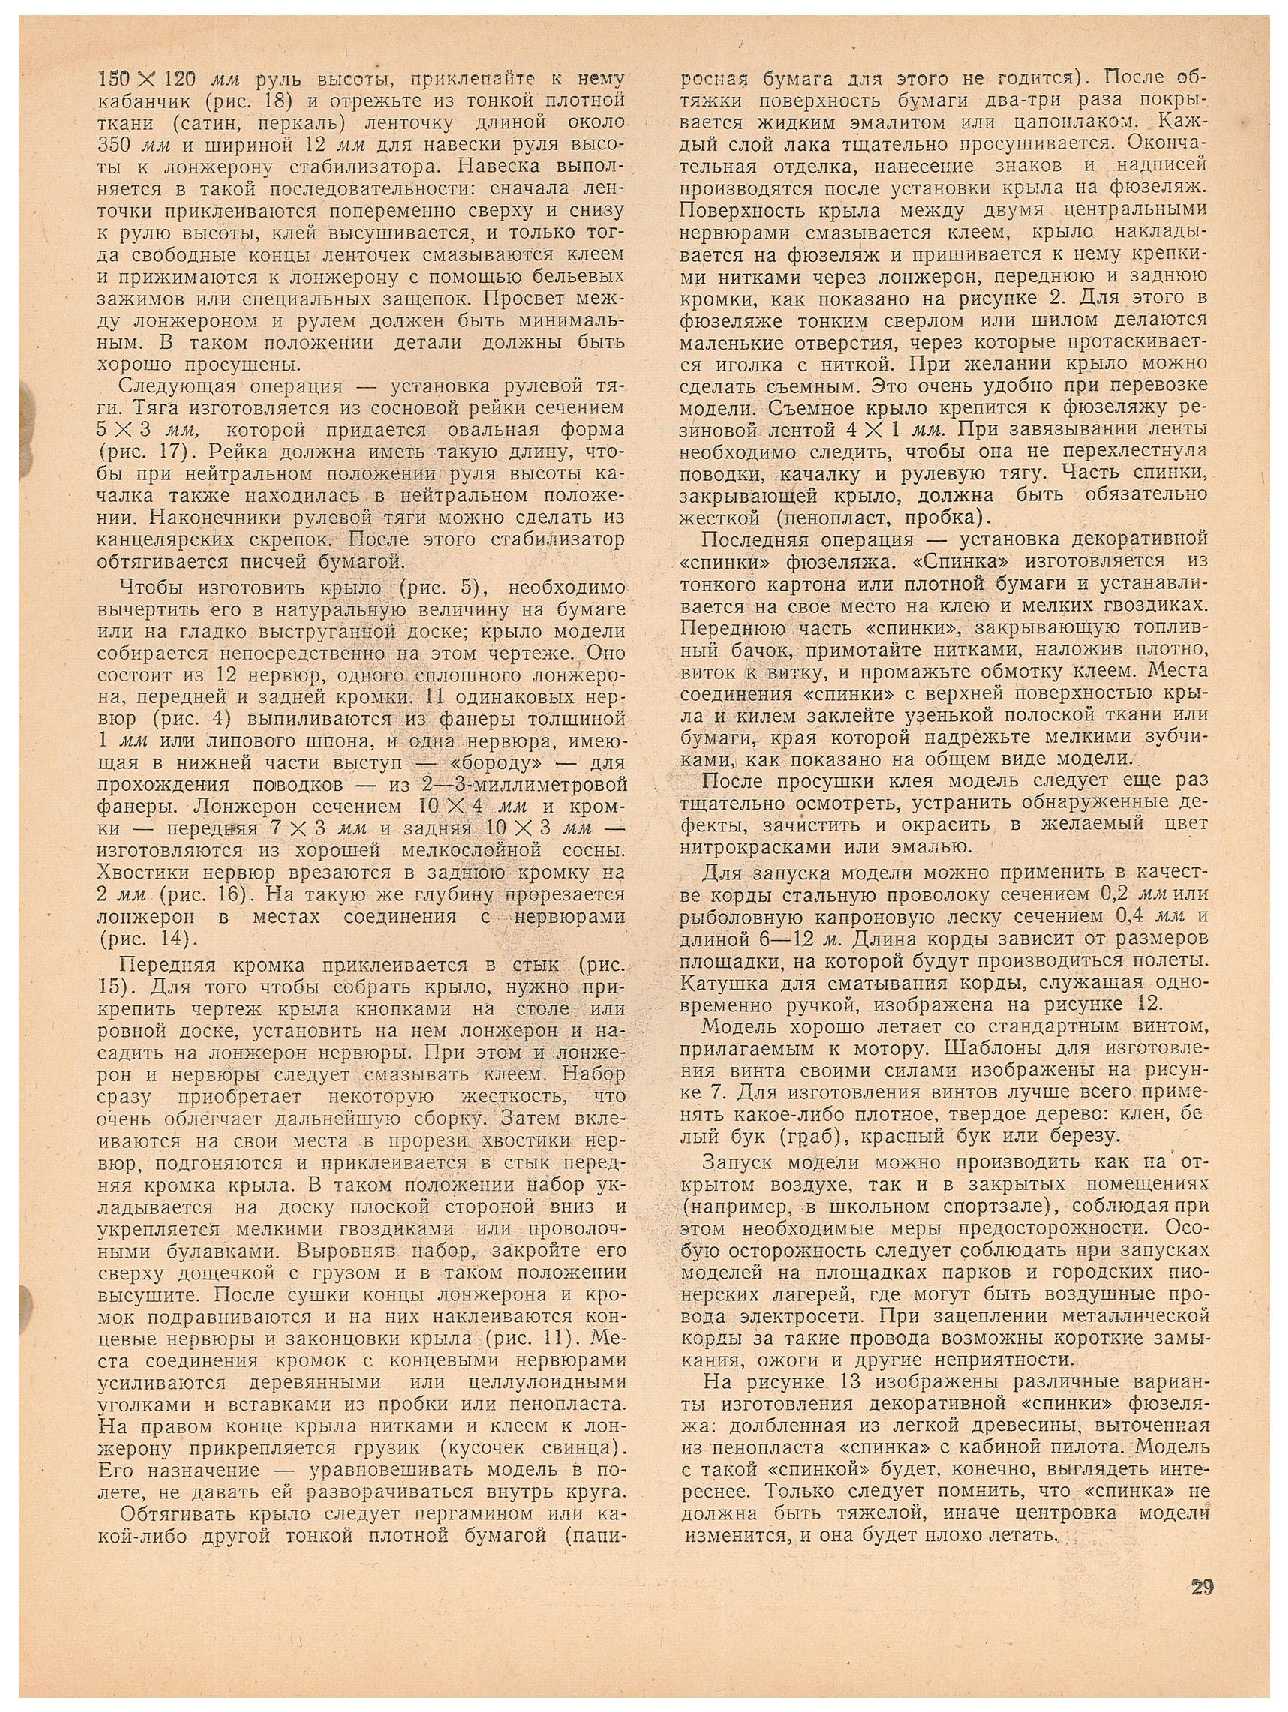 ЮМК 3, 1962, 29 c.